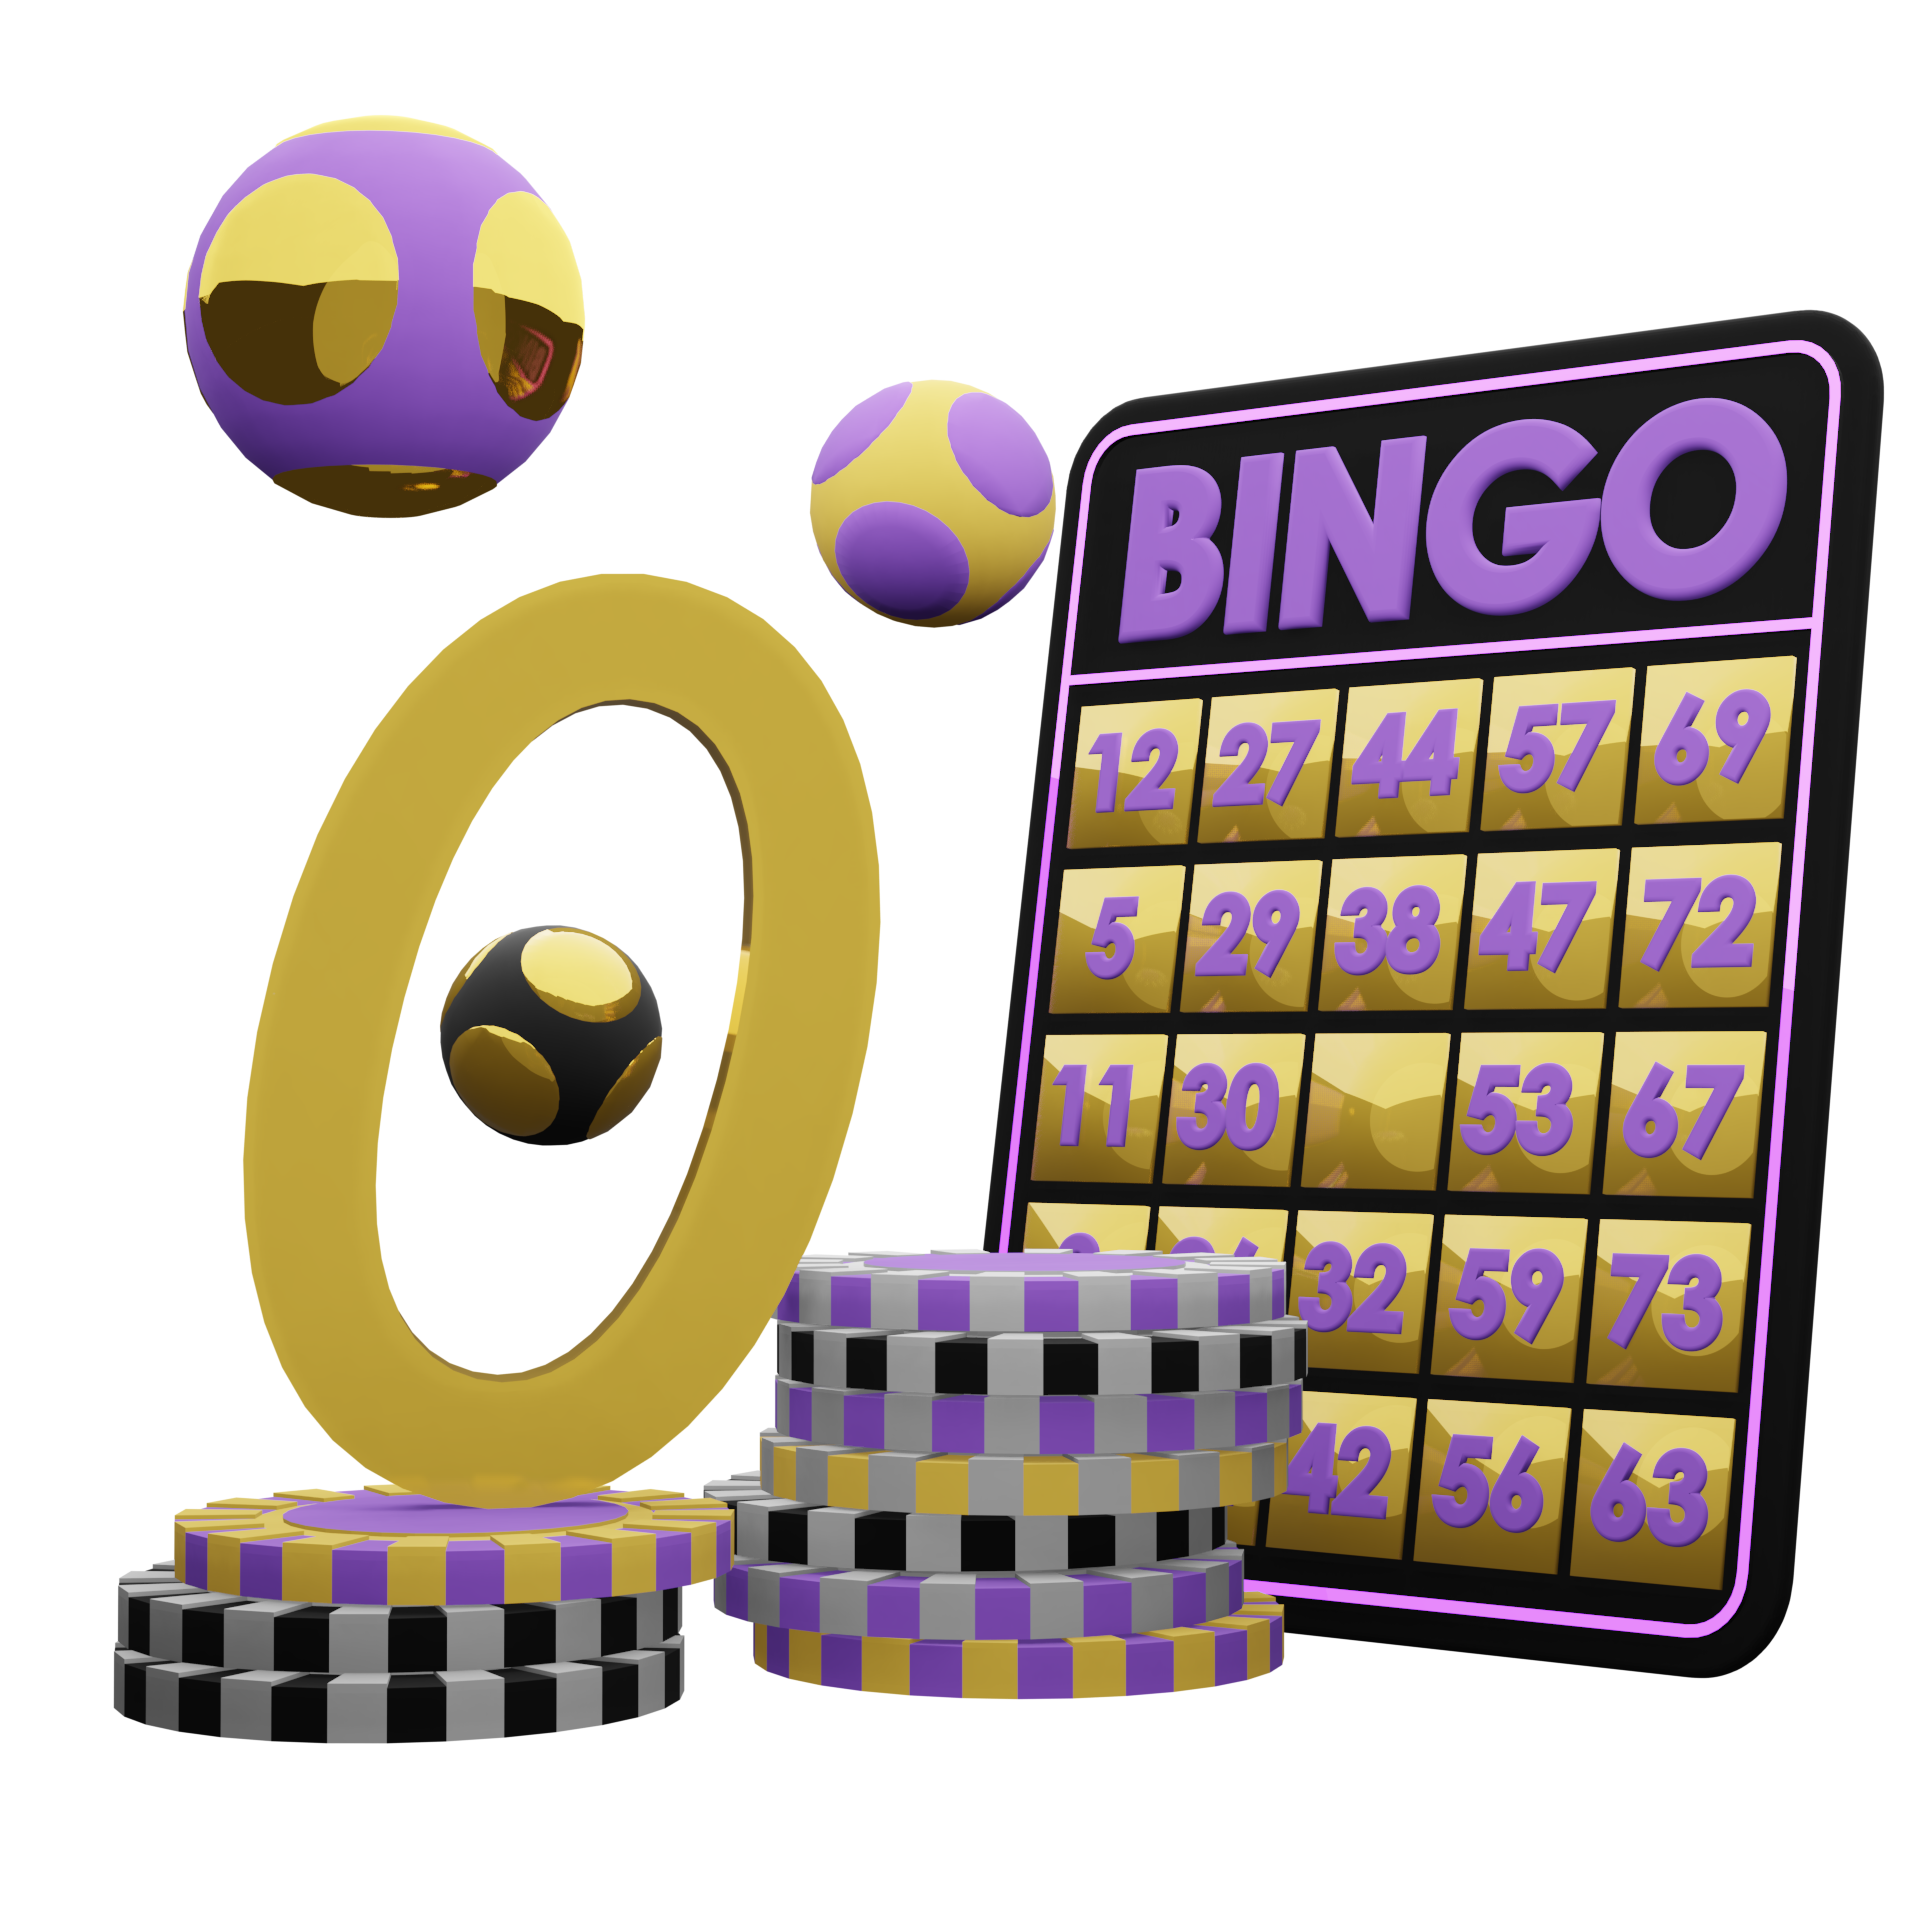 Best Bingo Sites UK: Where to Play Online Bingo for Real Money in the UK